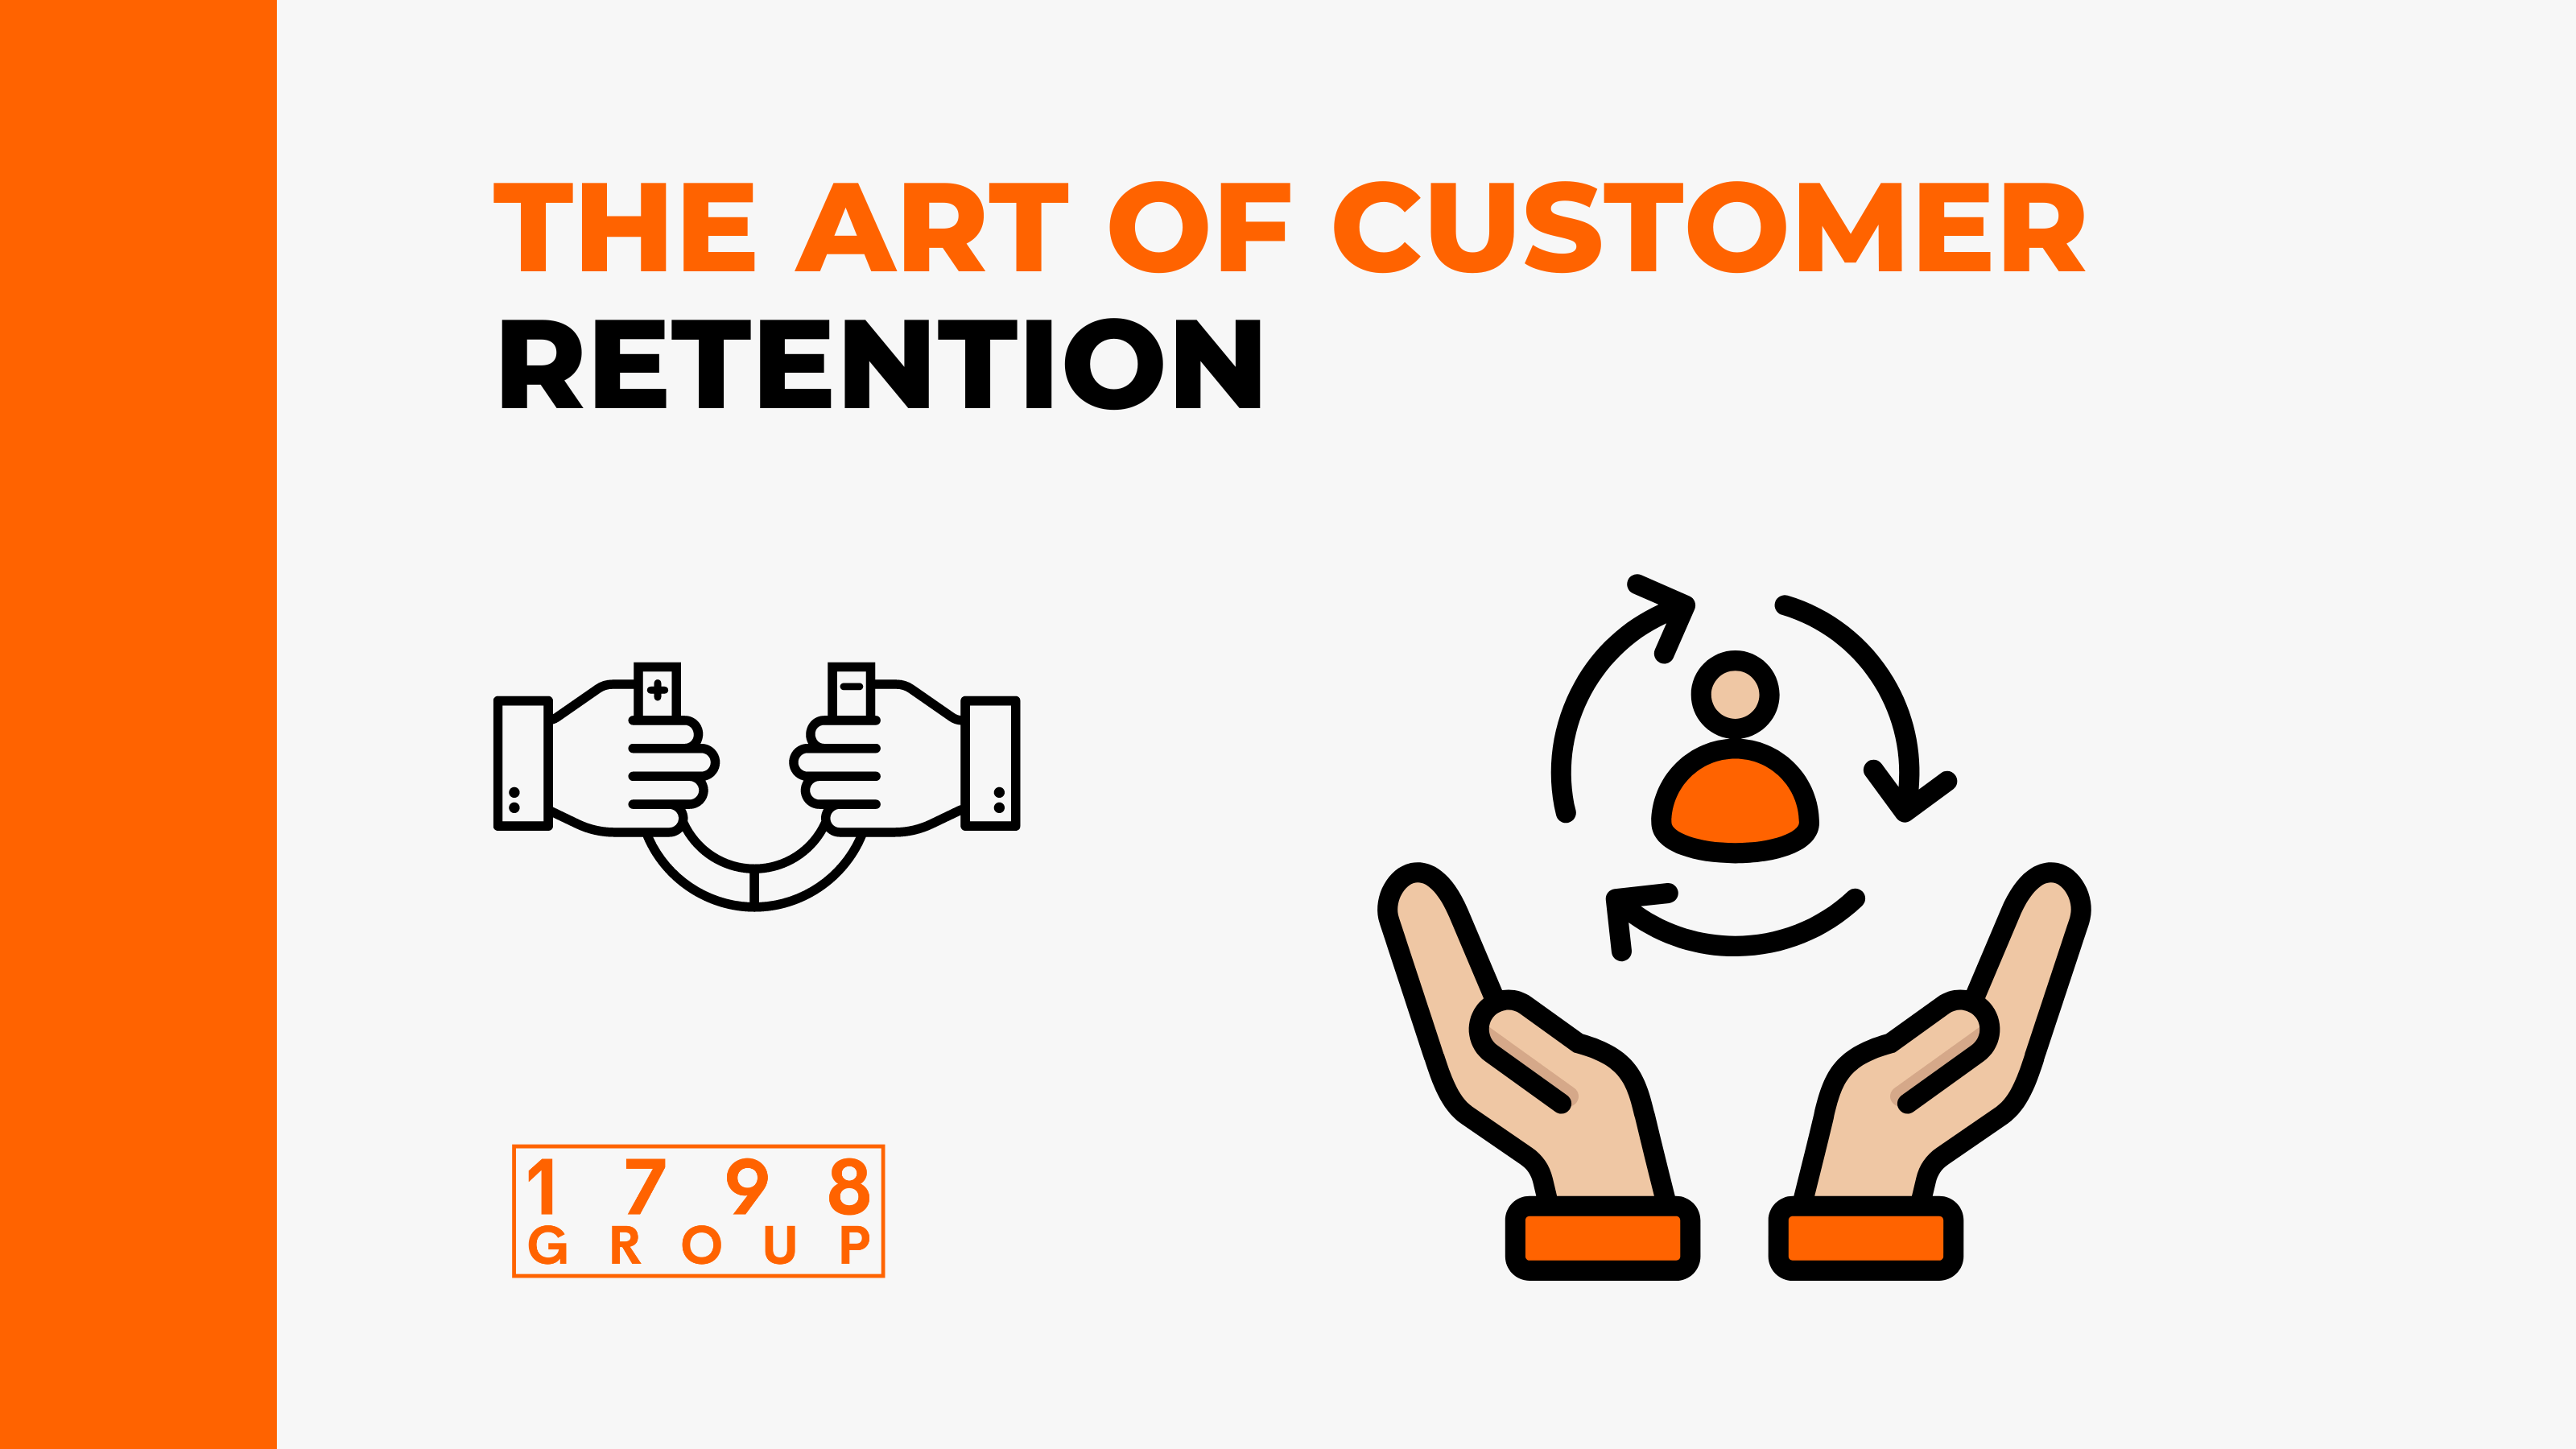 The Art of Customer Retention